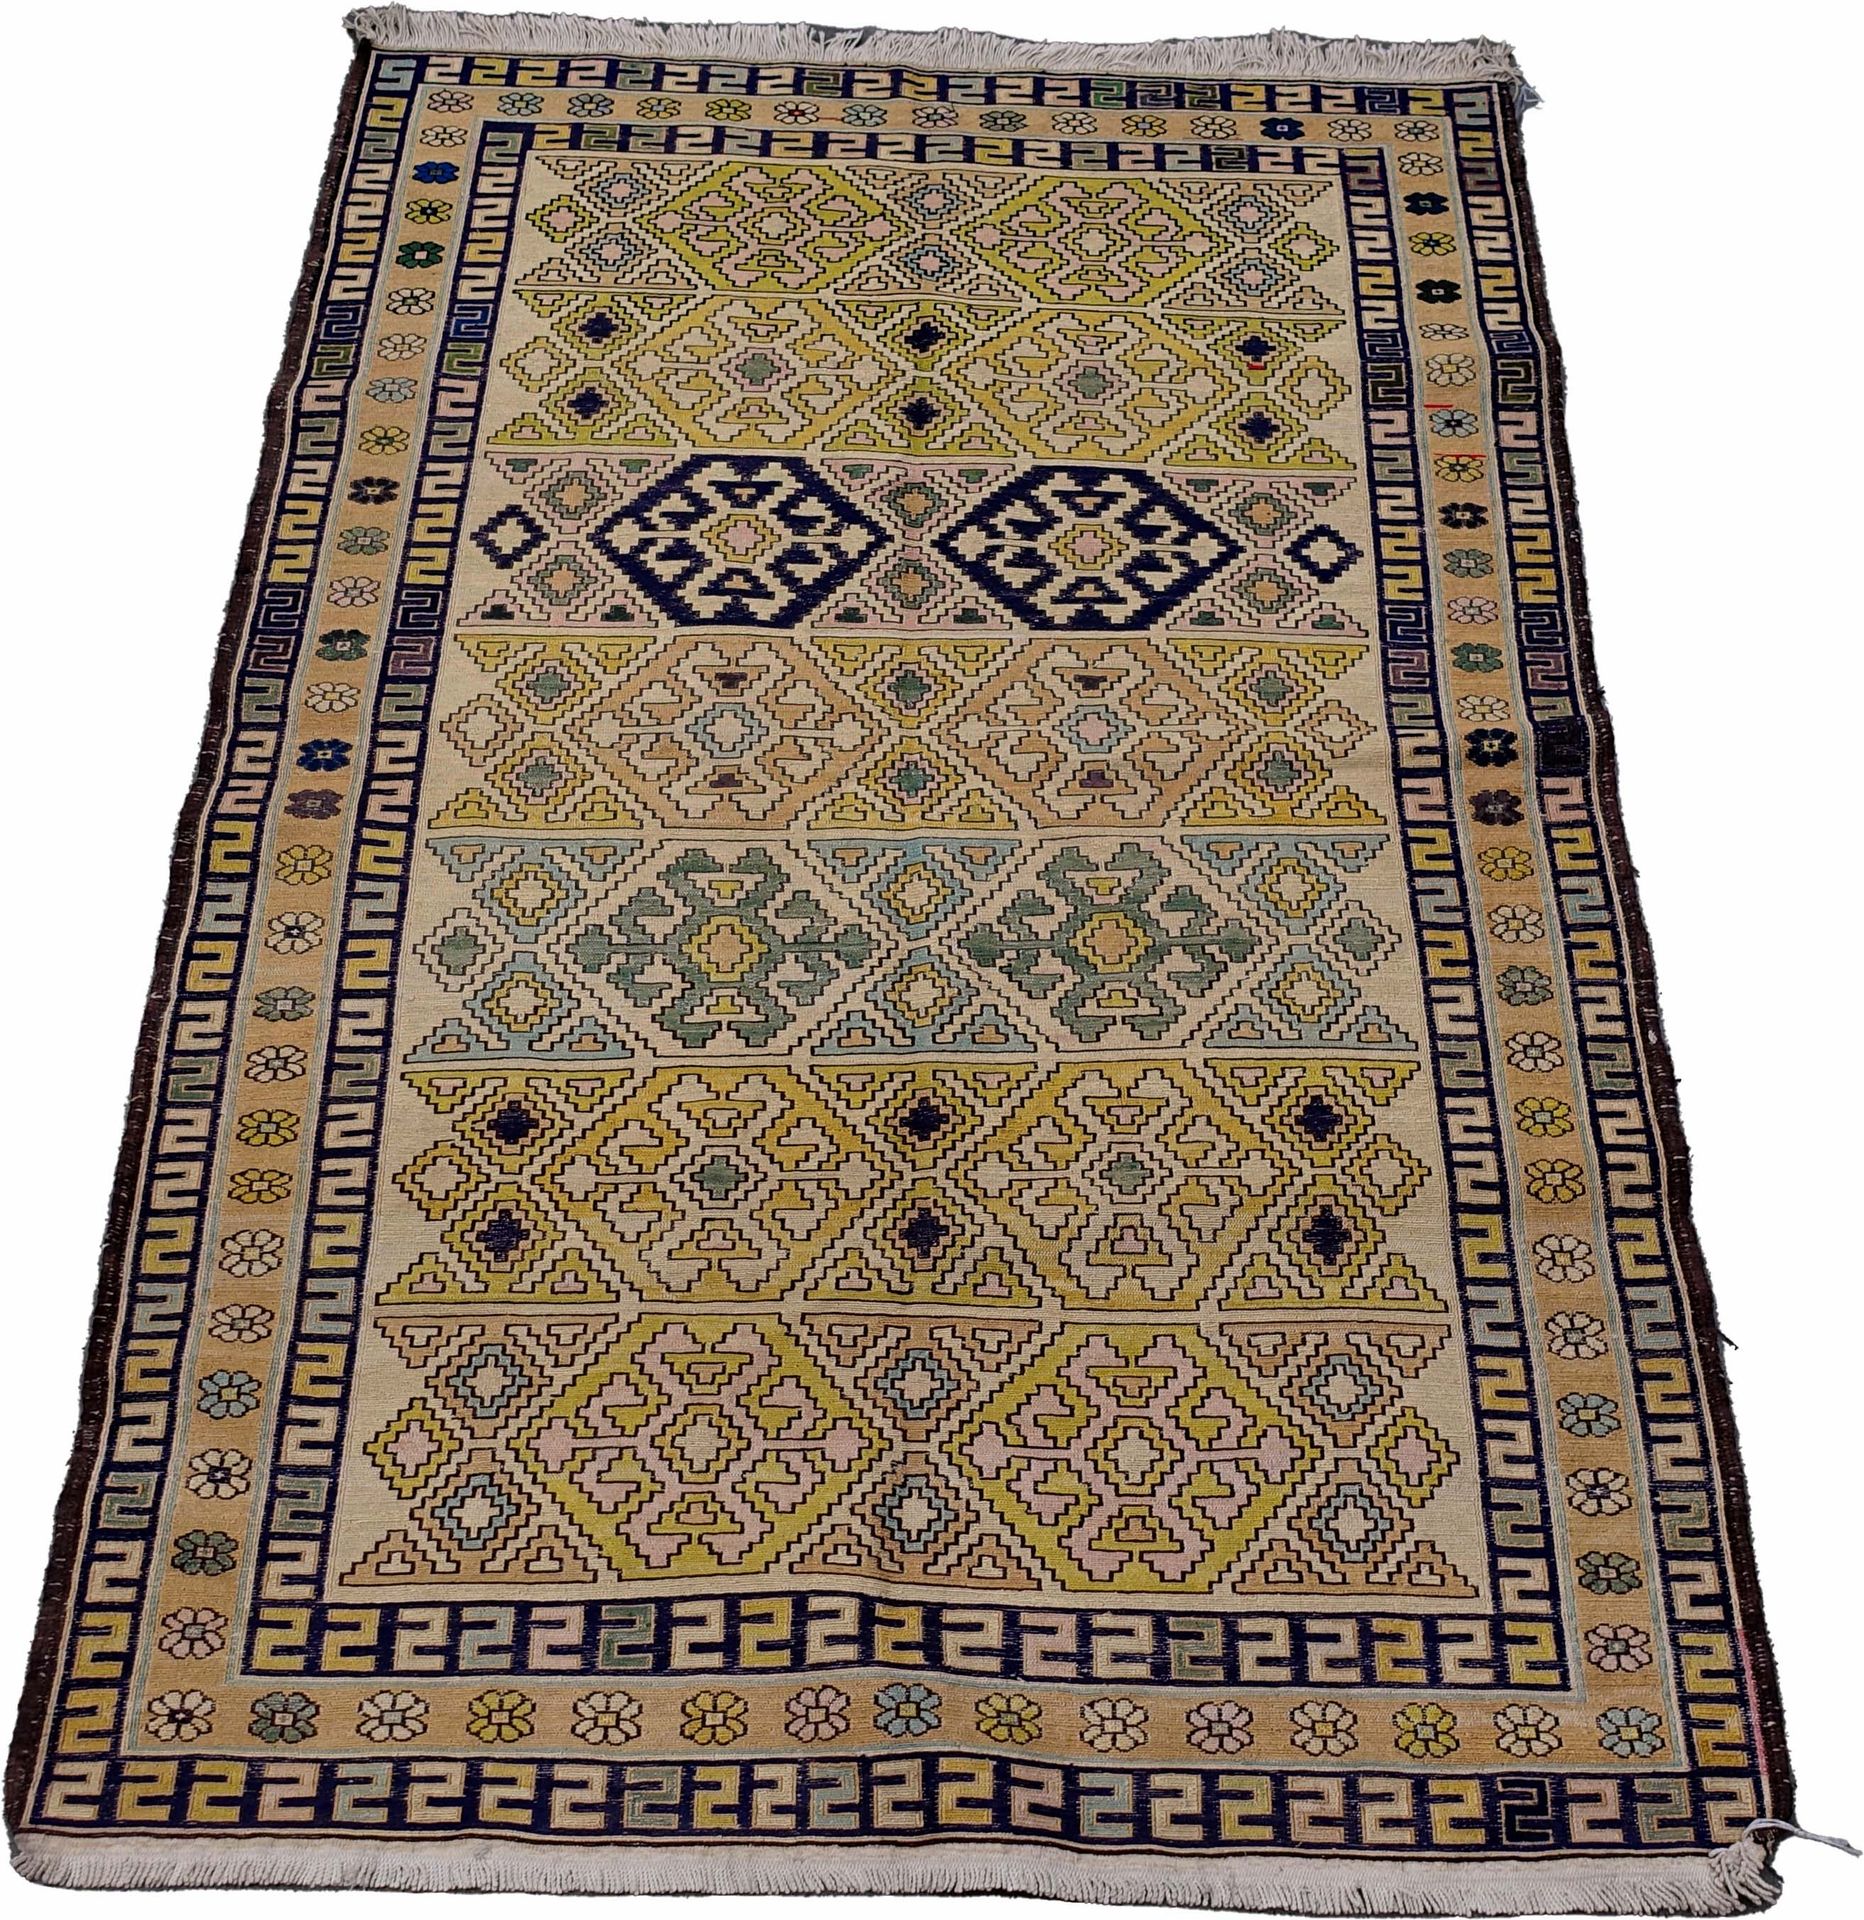 Carpette Soumak. 背景是浅色的，有钩状的奖章。三层带状边界。尺寸：190 x 120厘米。